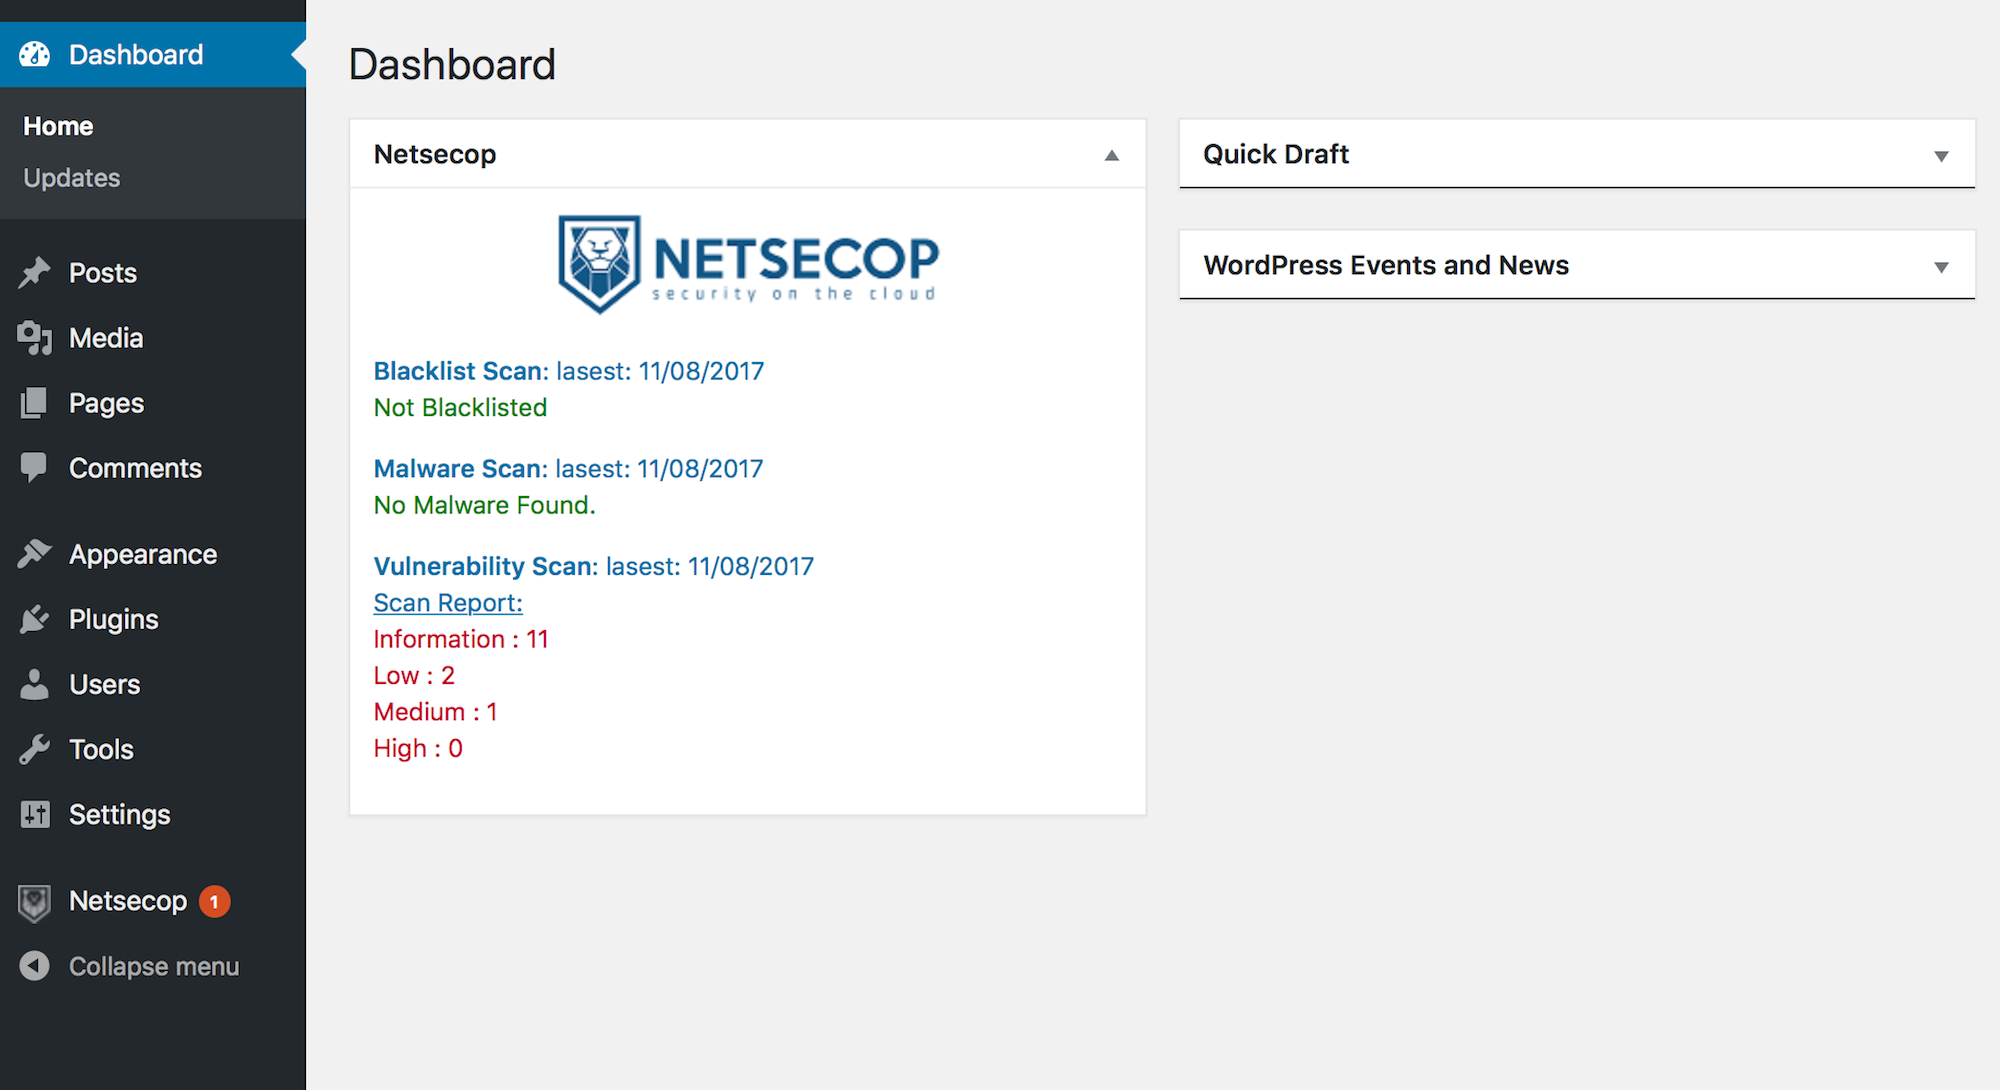 Netsecop Dashboard Widget